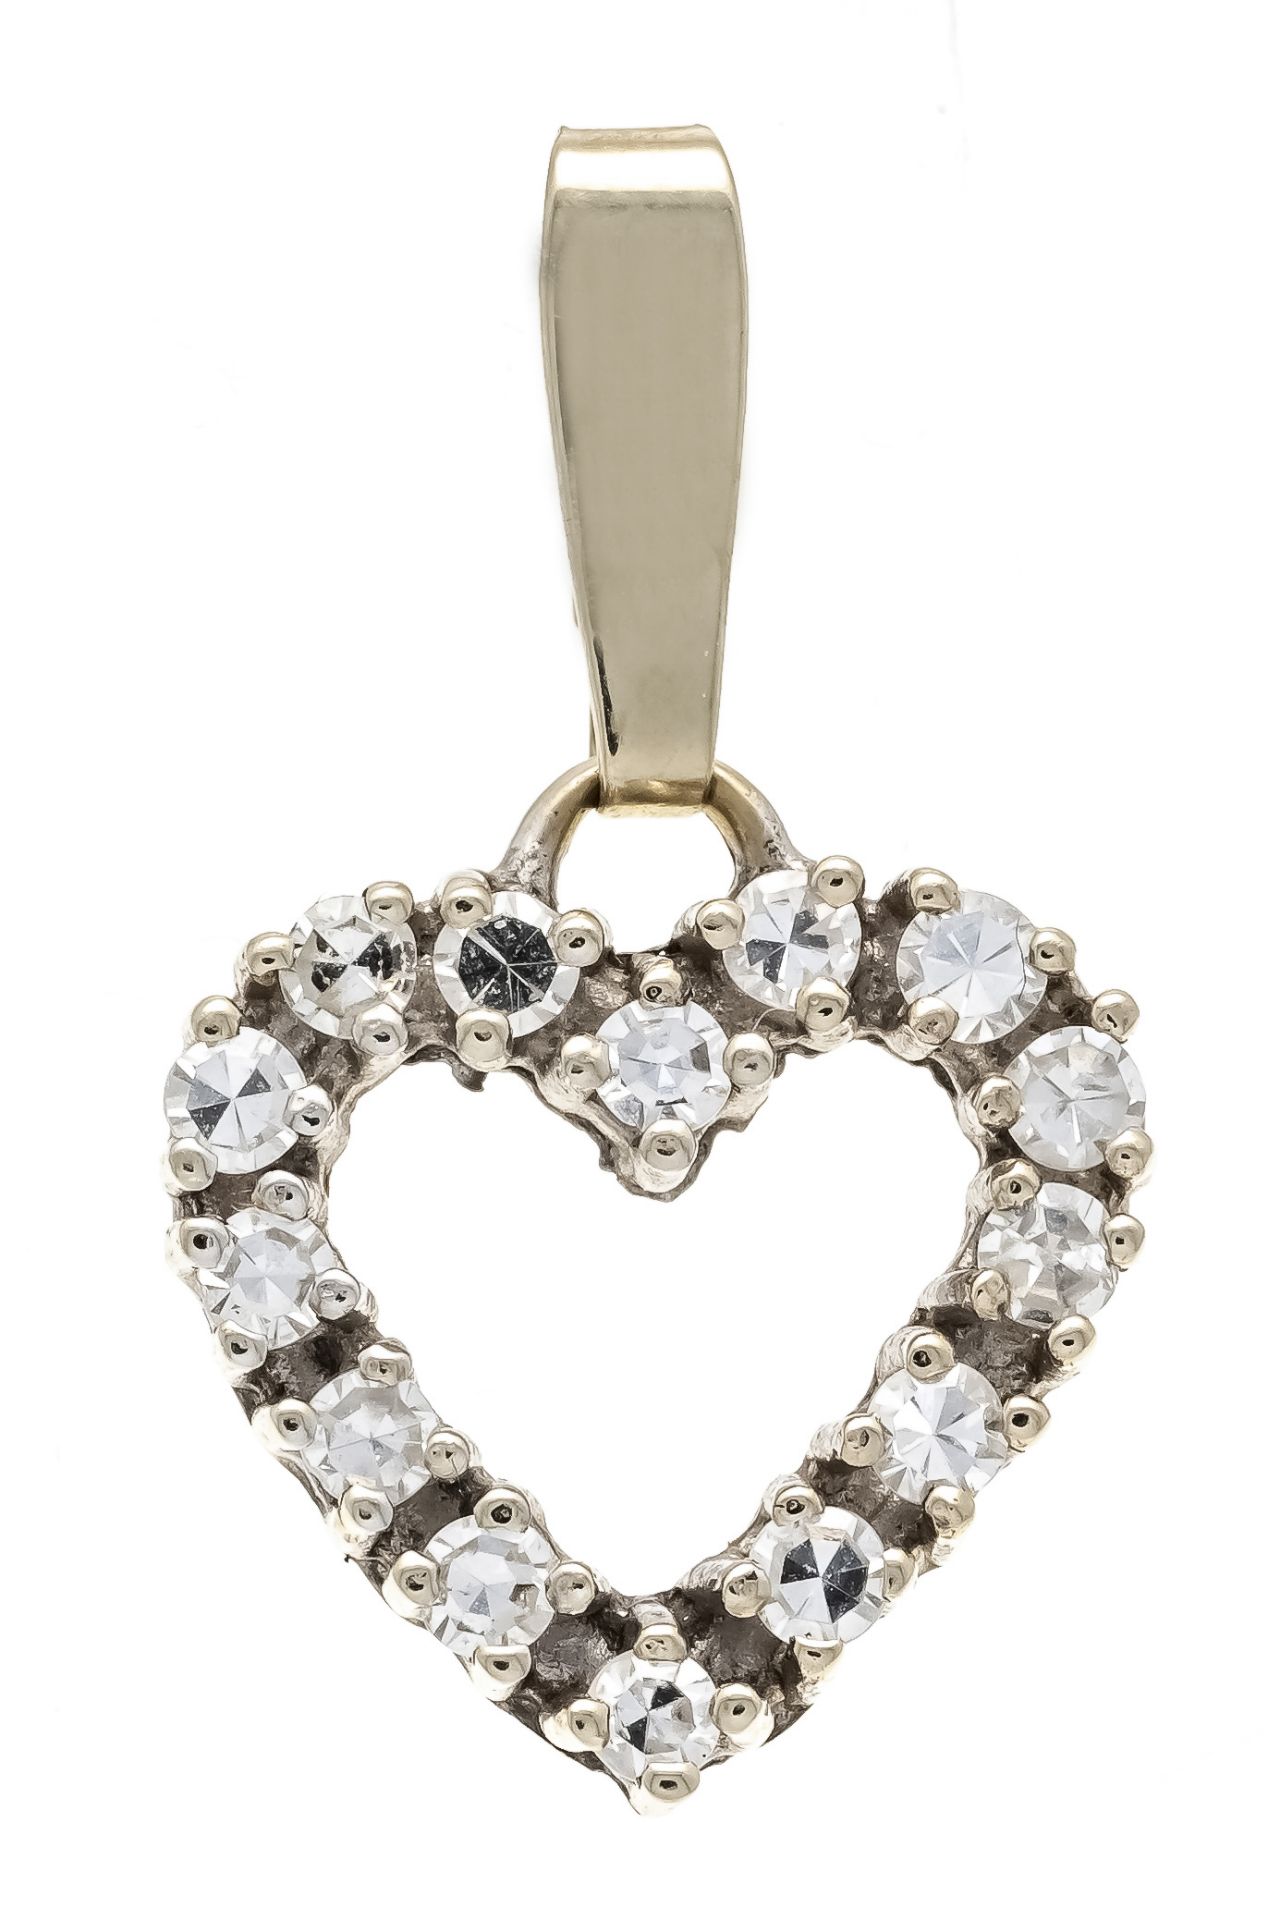 Diamond heart pendant WG 585/000 with 14 octagonal diamonds, total 0.28 ct Wesselton - slightly